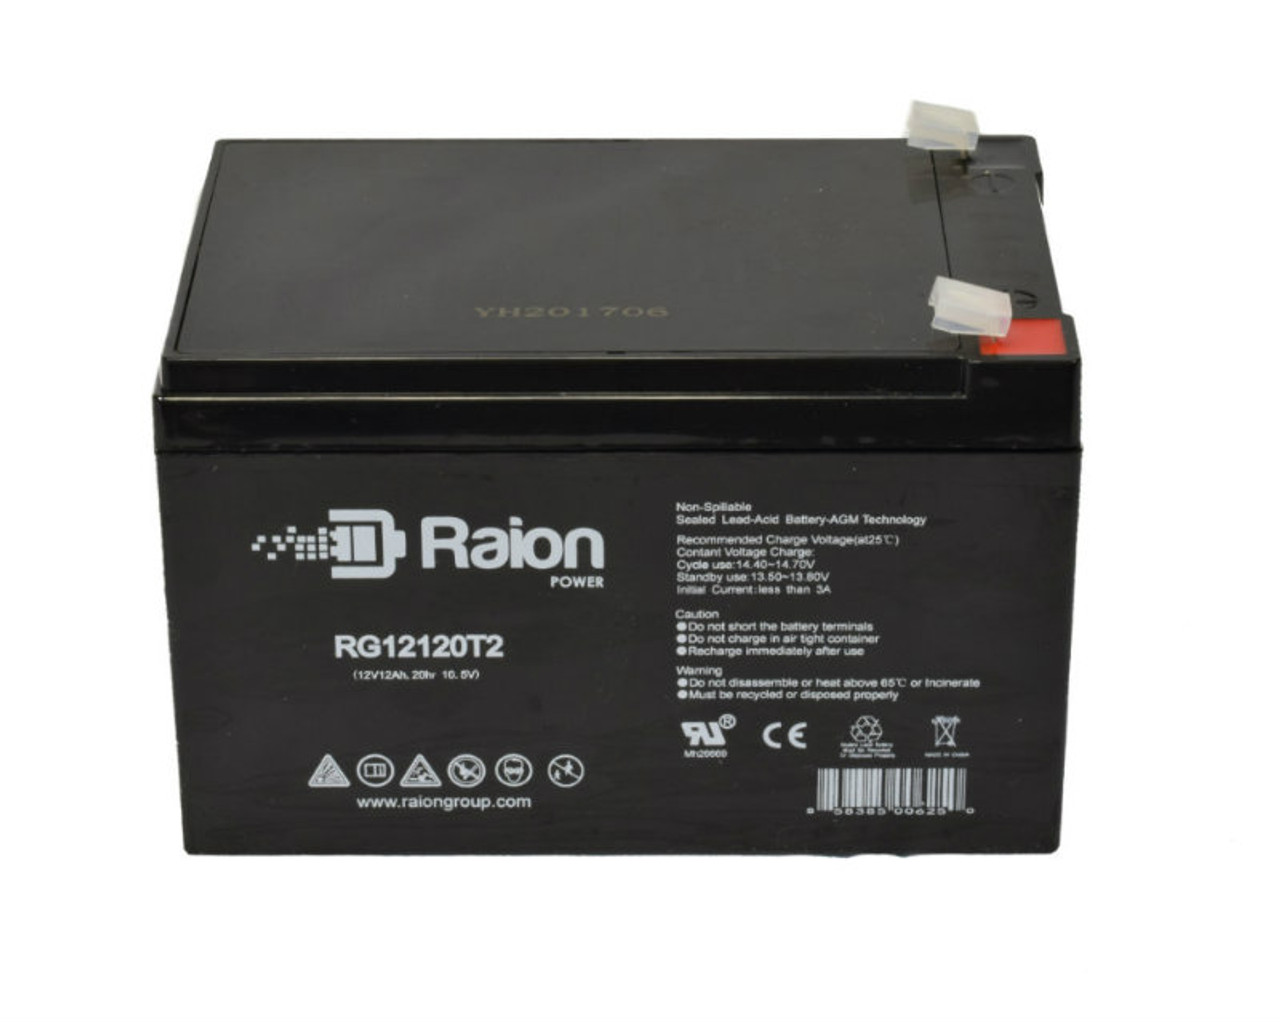 Raion Power RG12120T2 SLA Battery for Chiway SJ12V10Ah